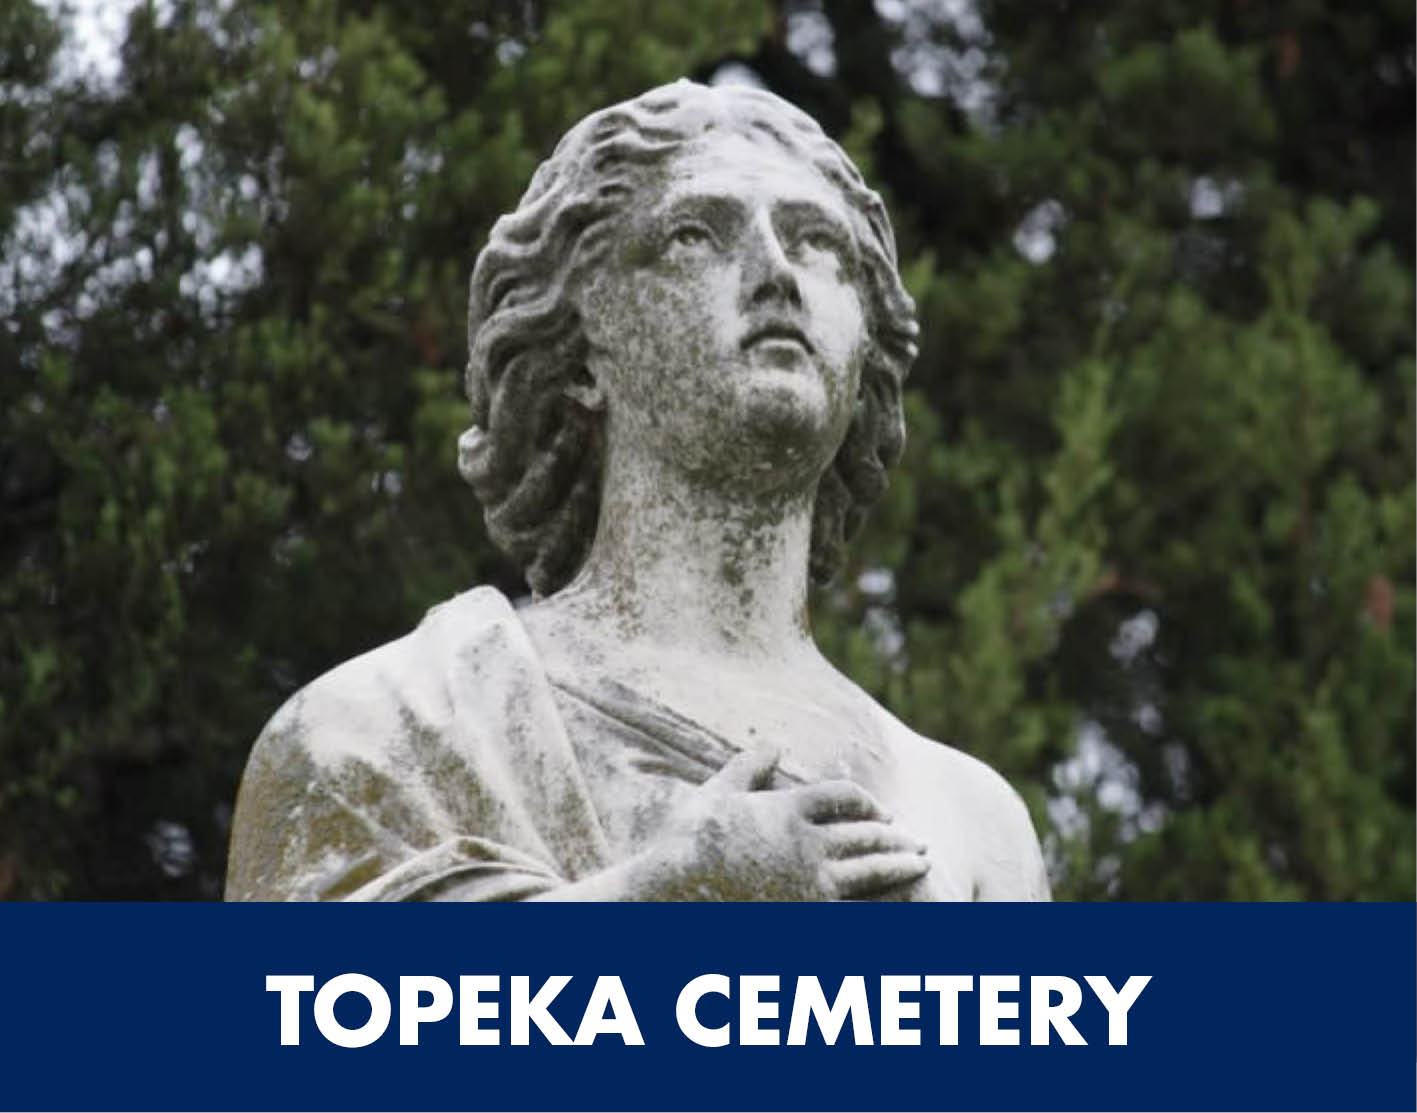 Topeka cemetery 2 tile